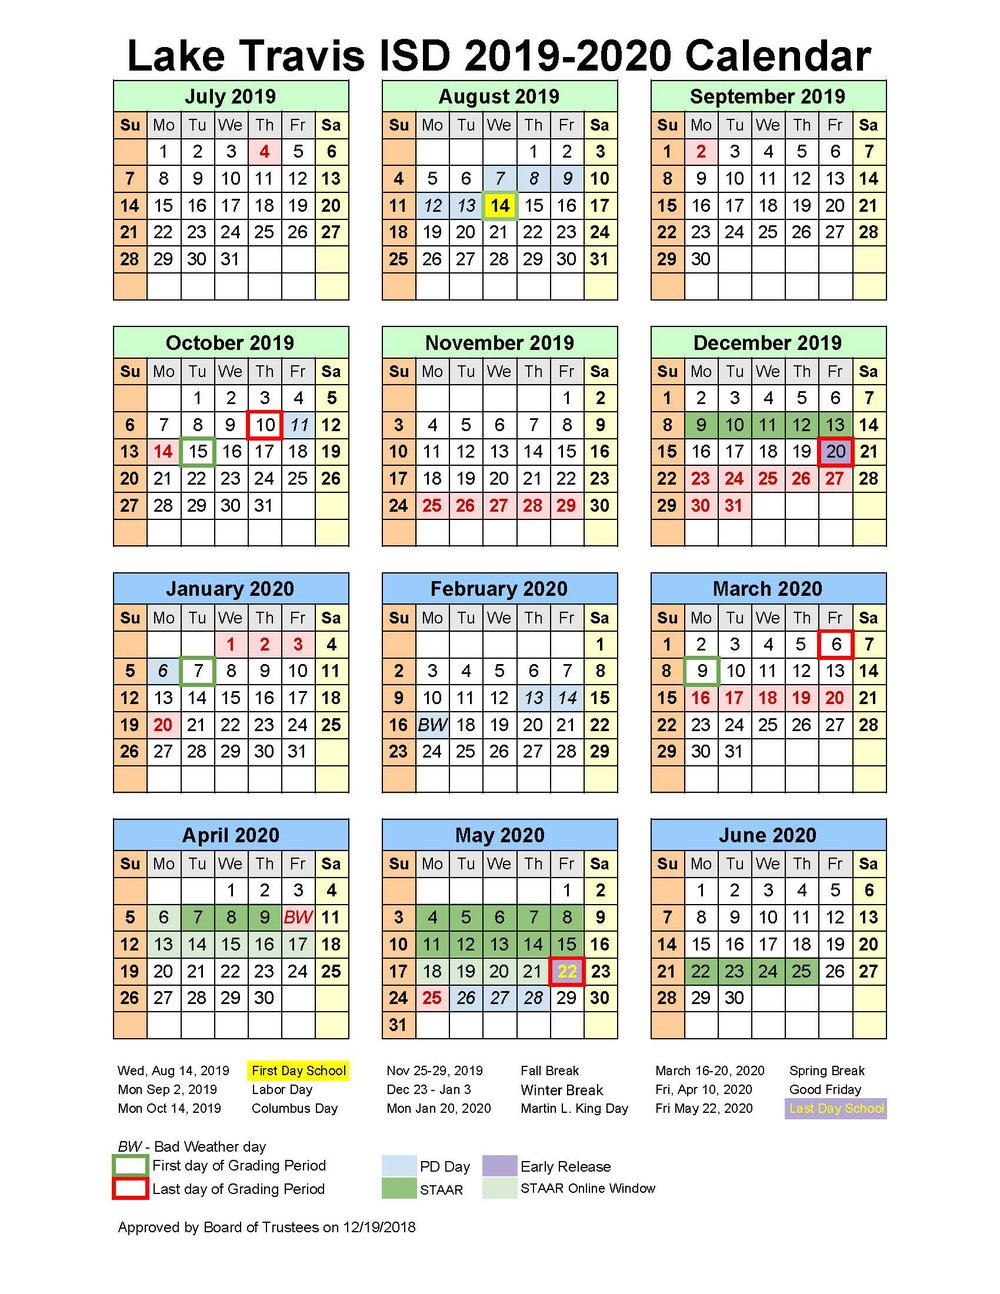 School Board Approves 2019-2020 Instructional Calendar